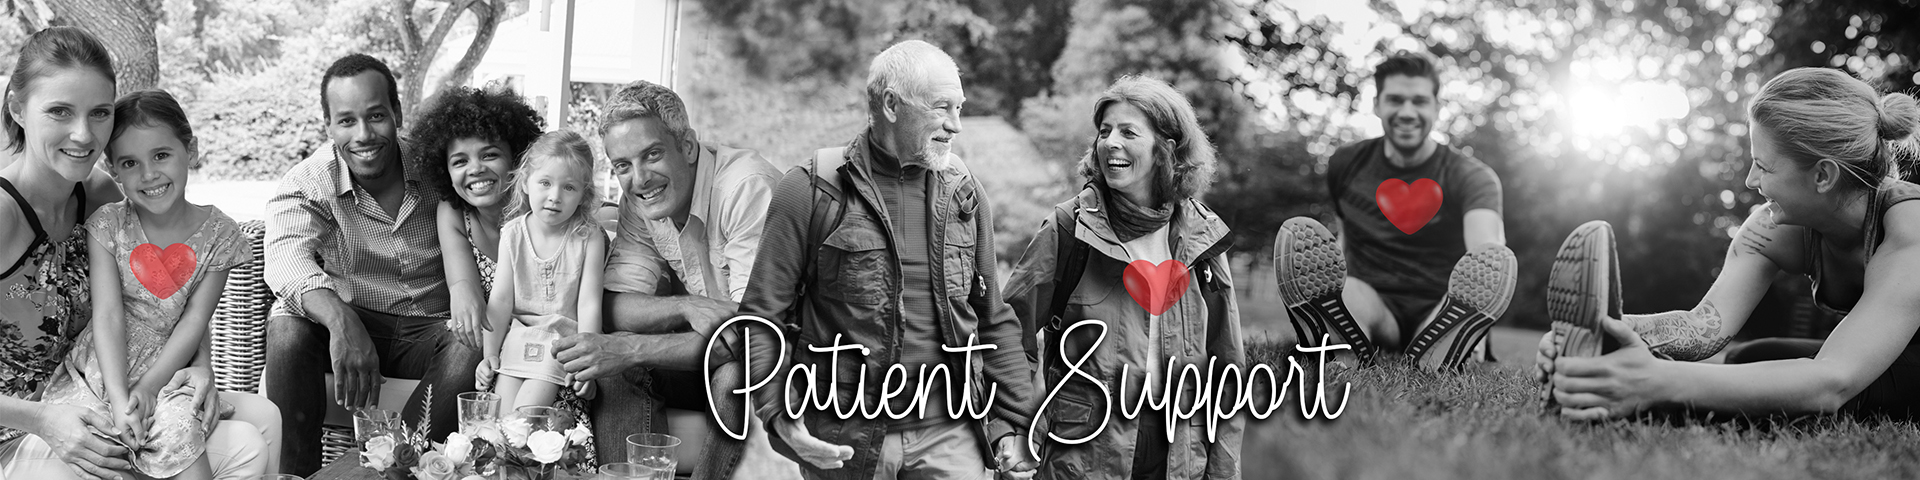 Patient Support